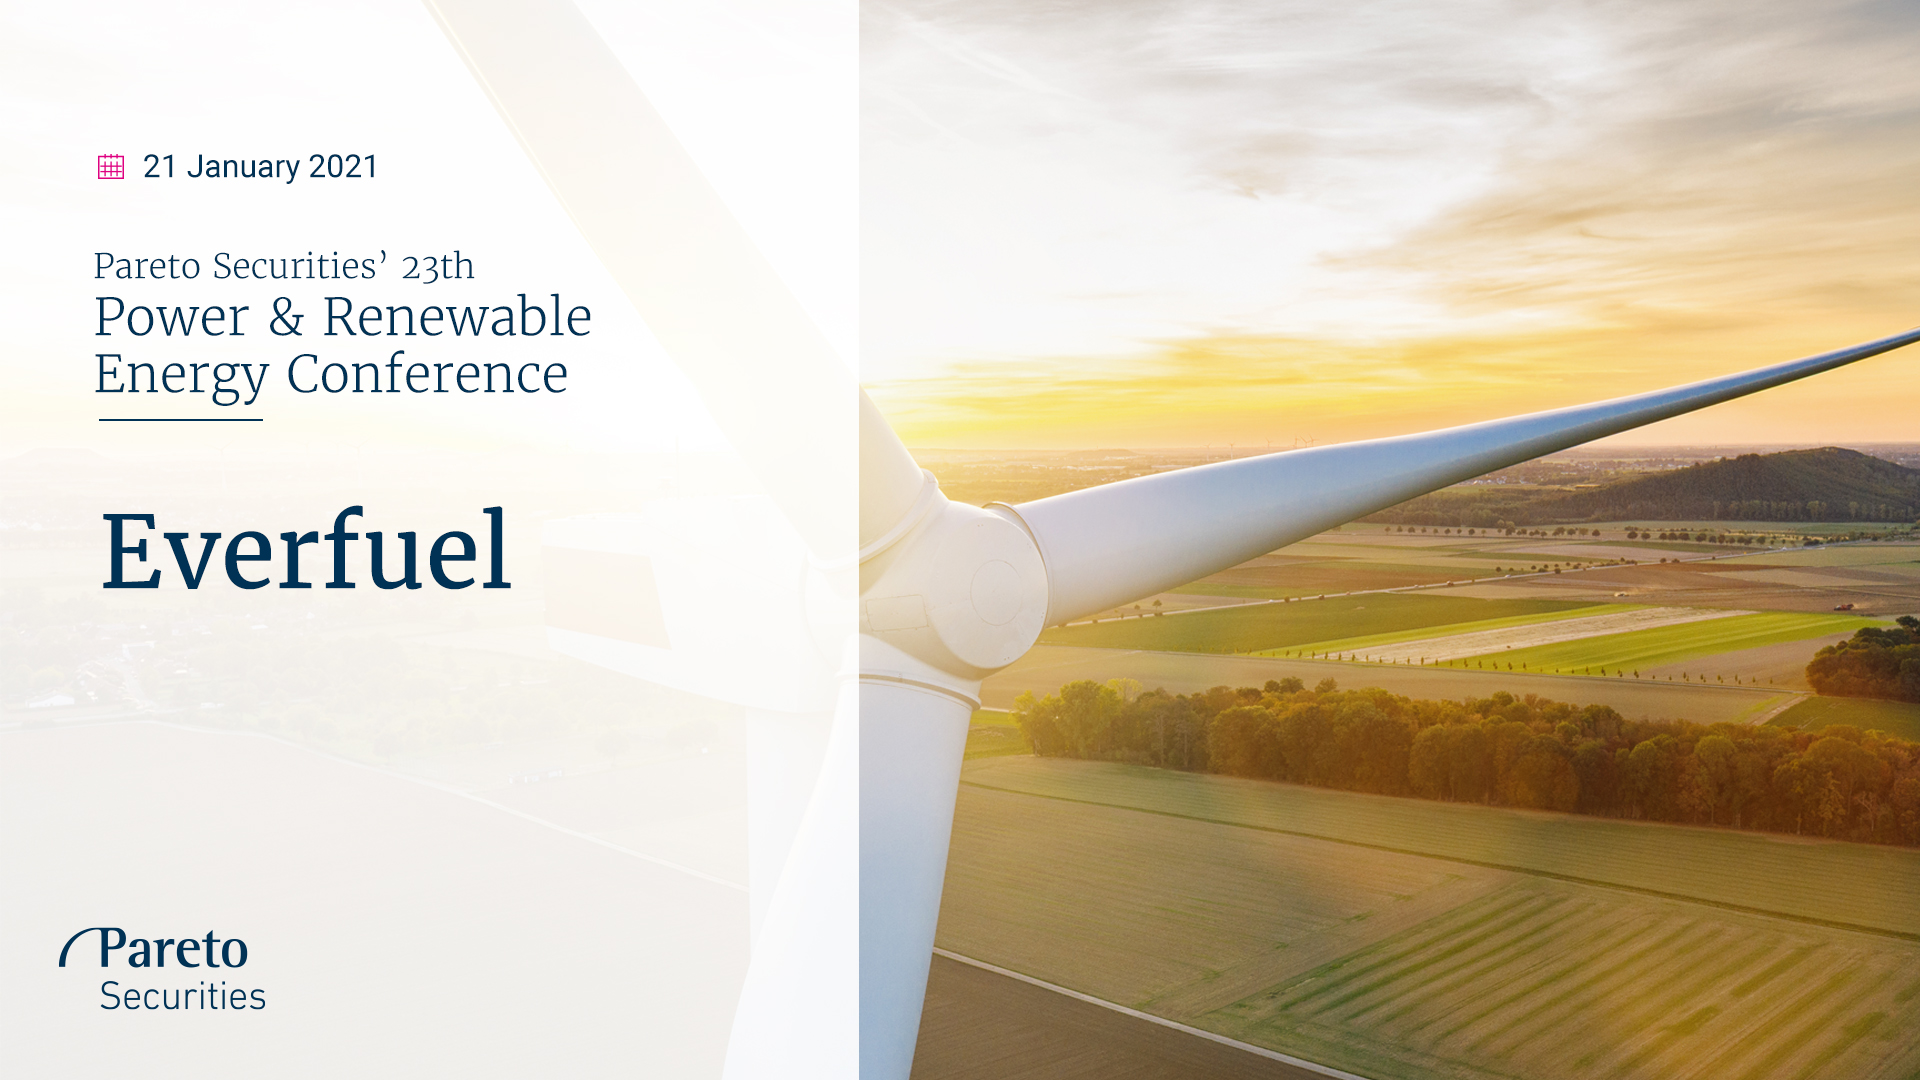 Everfuel / Pareto Securities’ Power & Renewable Energy Conference